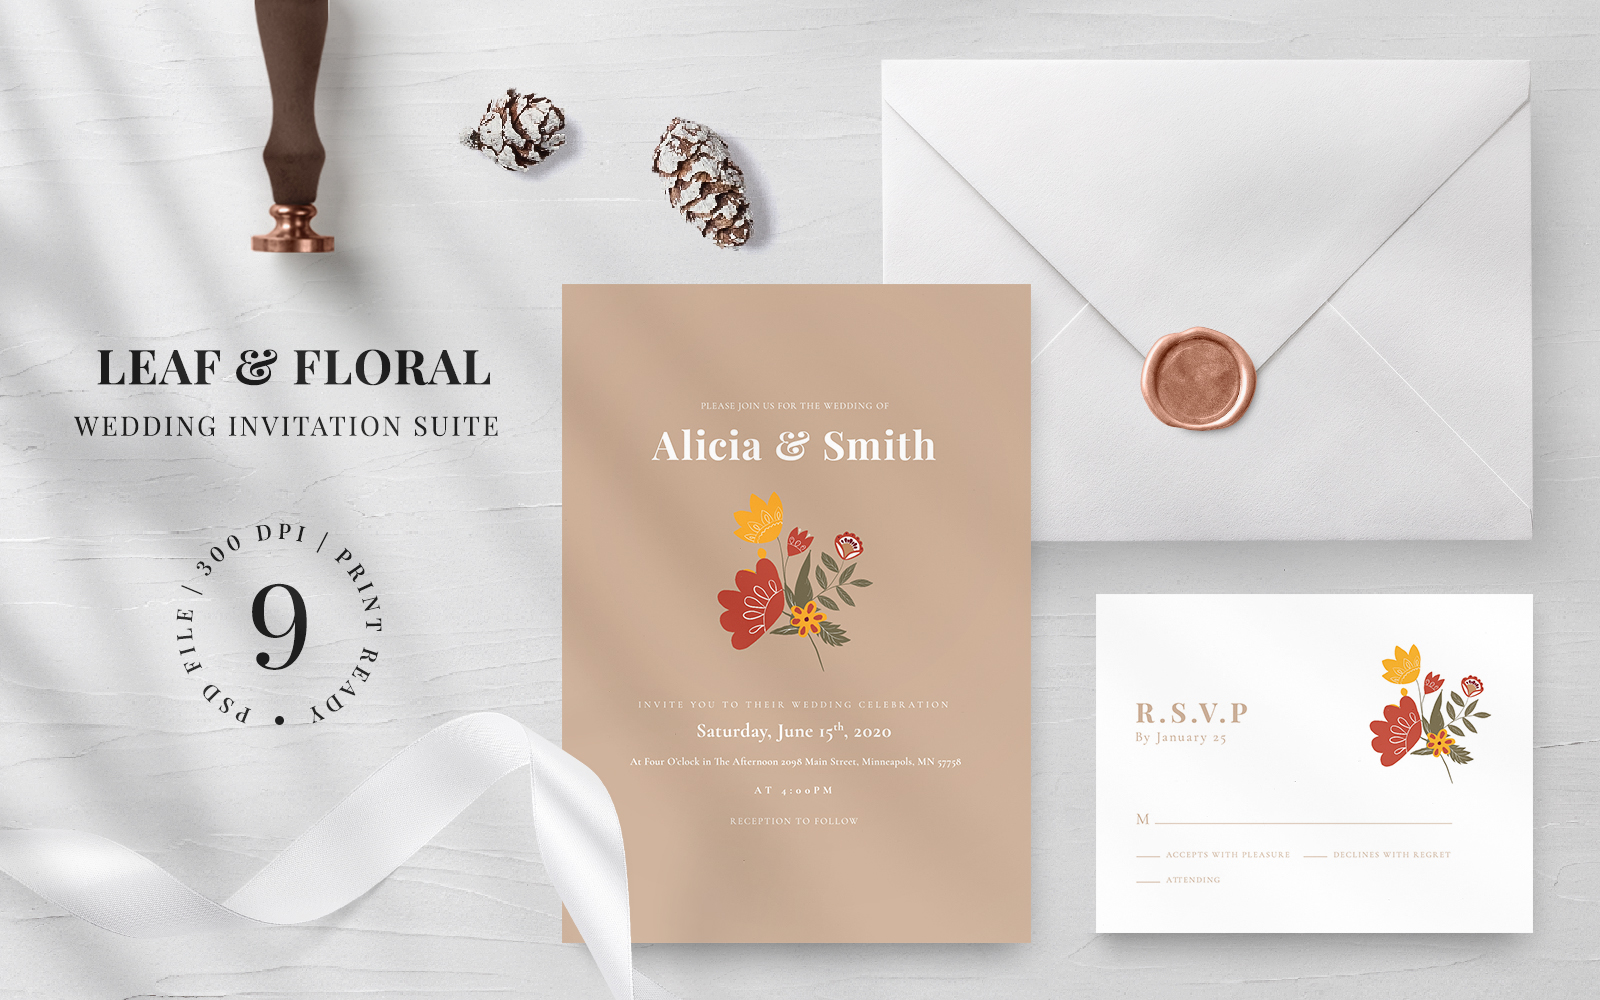 Leaf & Floral Wedding Invitation Suite - Corporate Identity Template